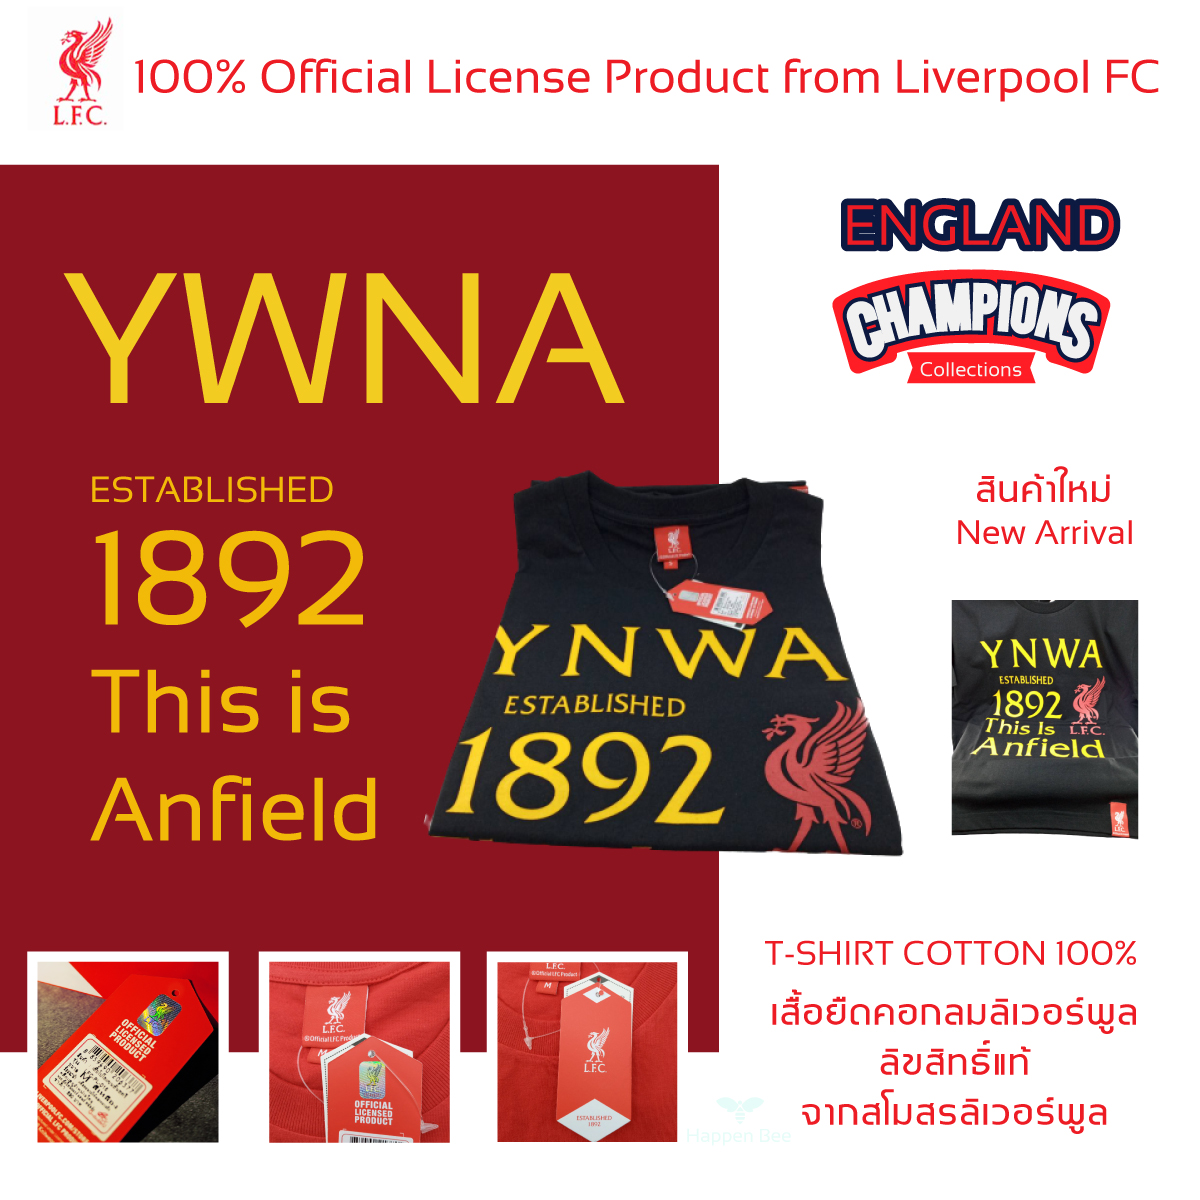 LFC Liverpool  Official Licence Product : YWNA ESTABLISHED 1892 This is Anfield เสื้อลิเวอร์พูล เสื้อยืดคอกลมลิเวอร์พูล ลิขสิทธิ์แท้จากสโมสรลิเวอร์พูล T066